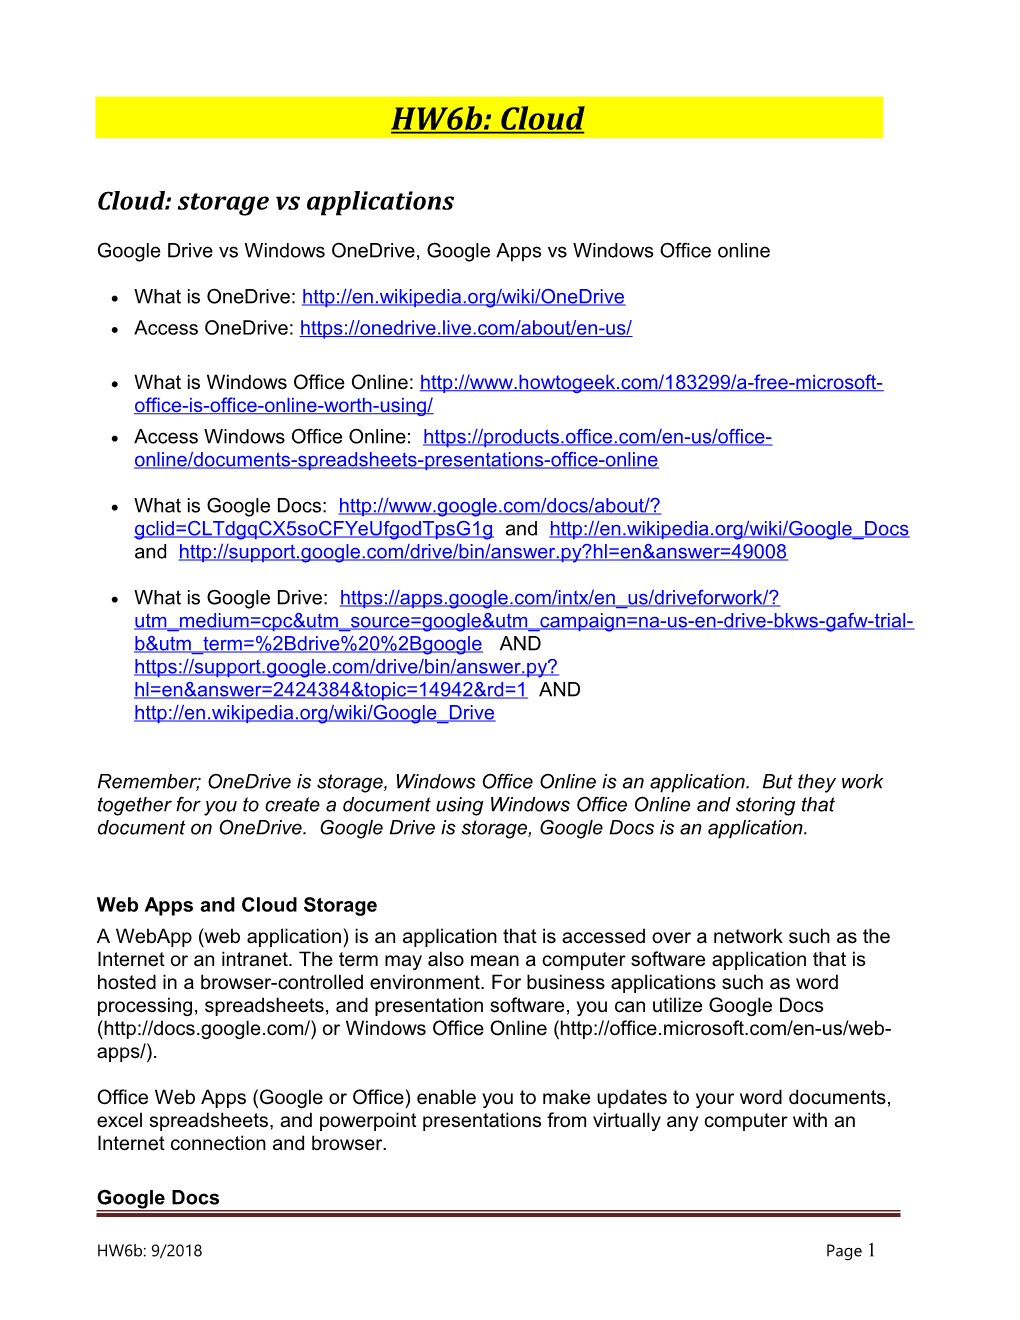 Cloud: Storage Vs Applications